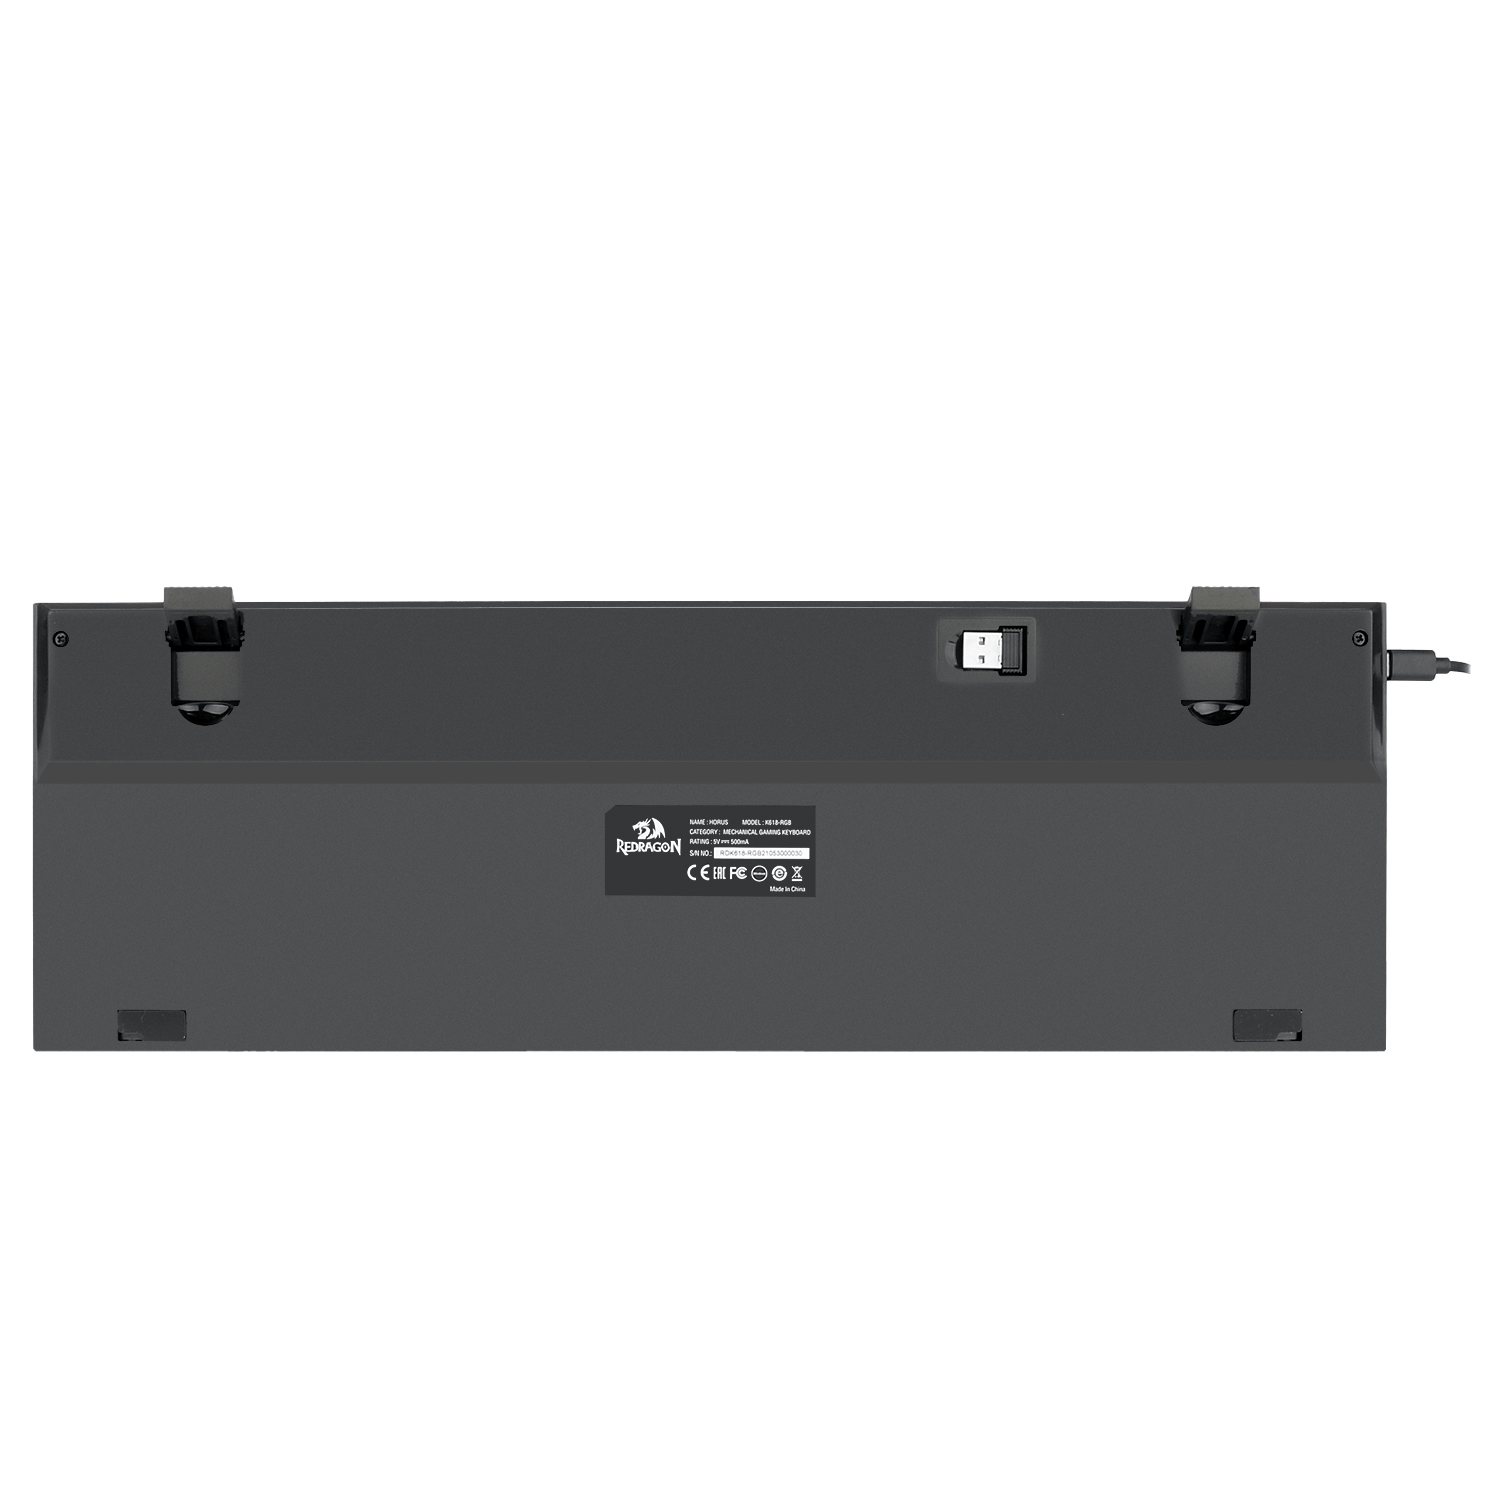 Redragon K618 Horus Mechanical Keyboard, Bluetooth/2.4Ghz/Wired Tri-Mode Ultra-Thin Low Profile Gaming Keyboard